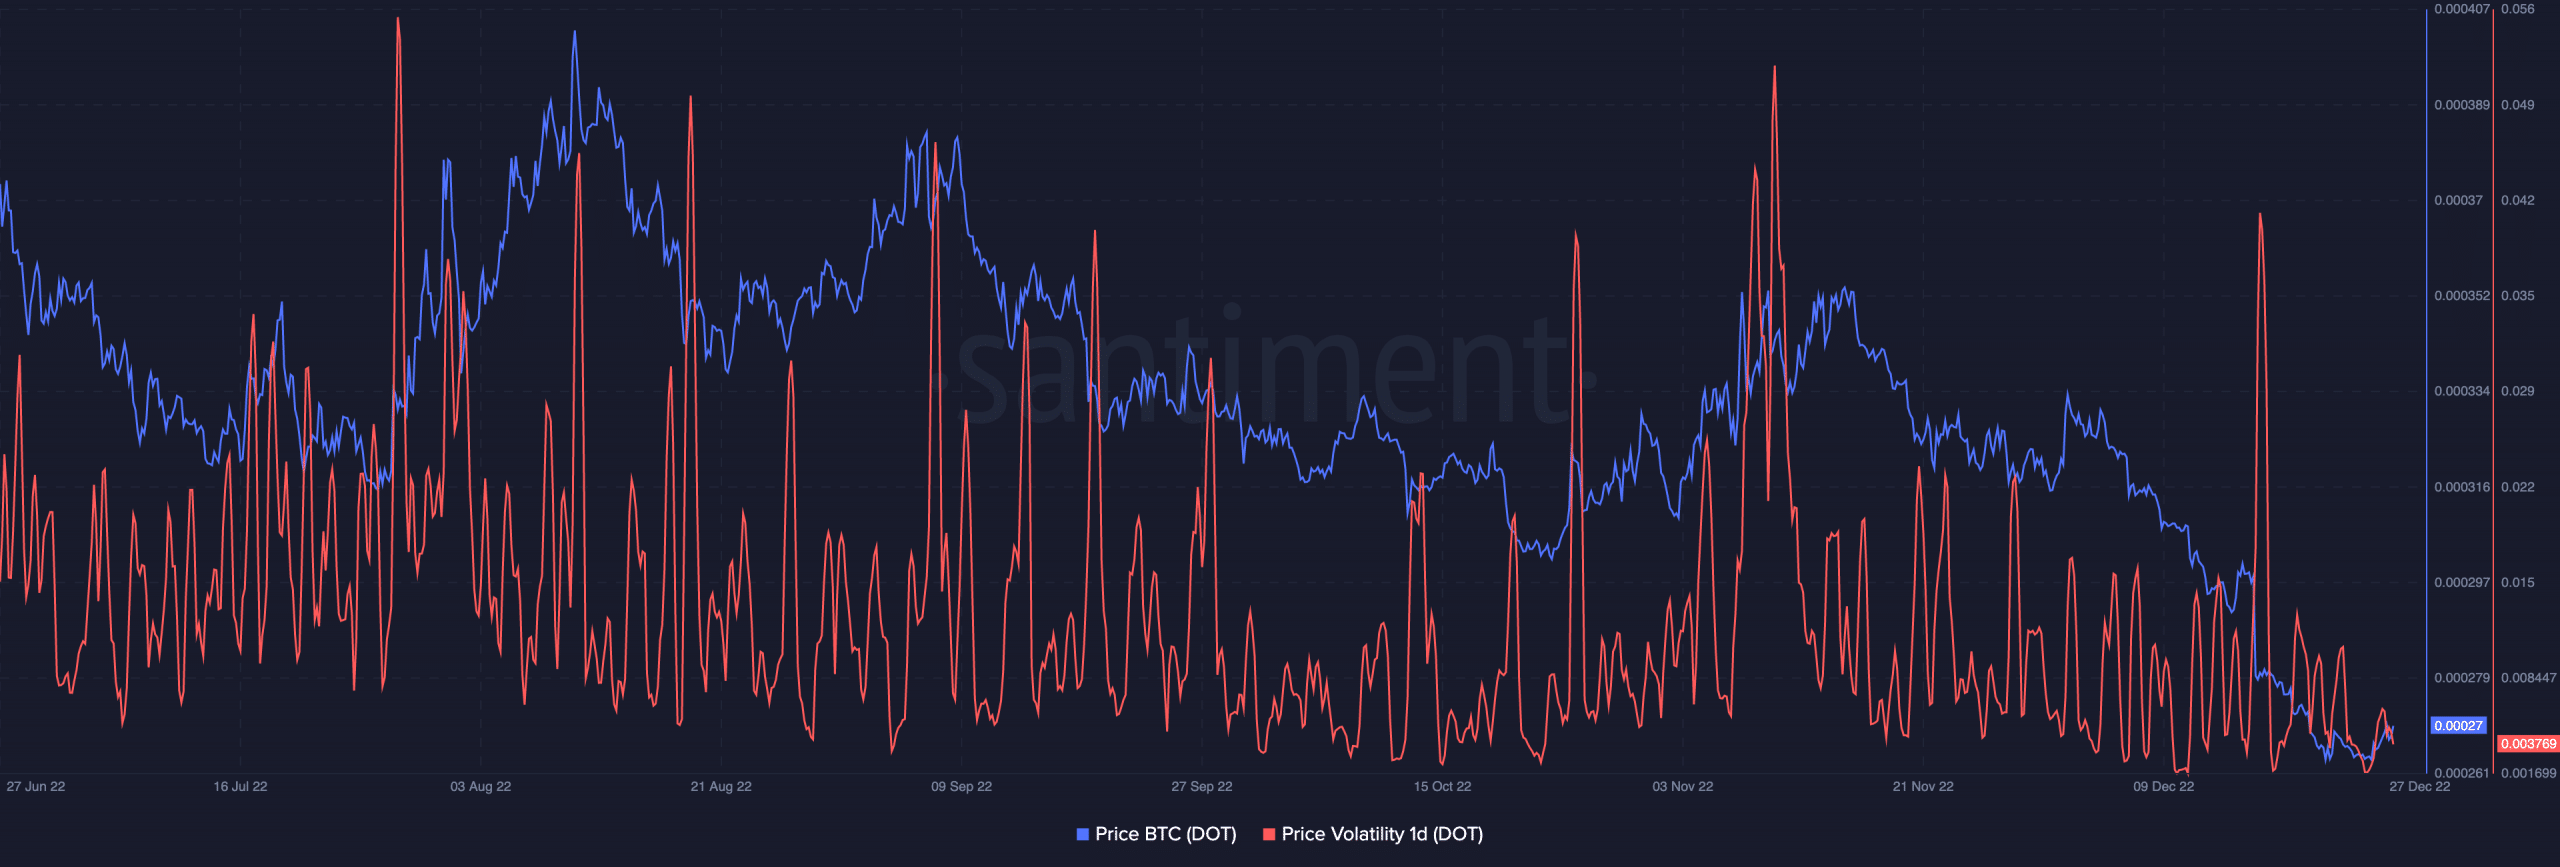 Polkadot price volatility and price against Bitcoin